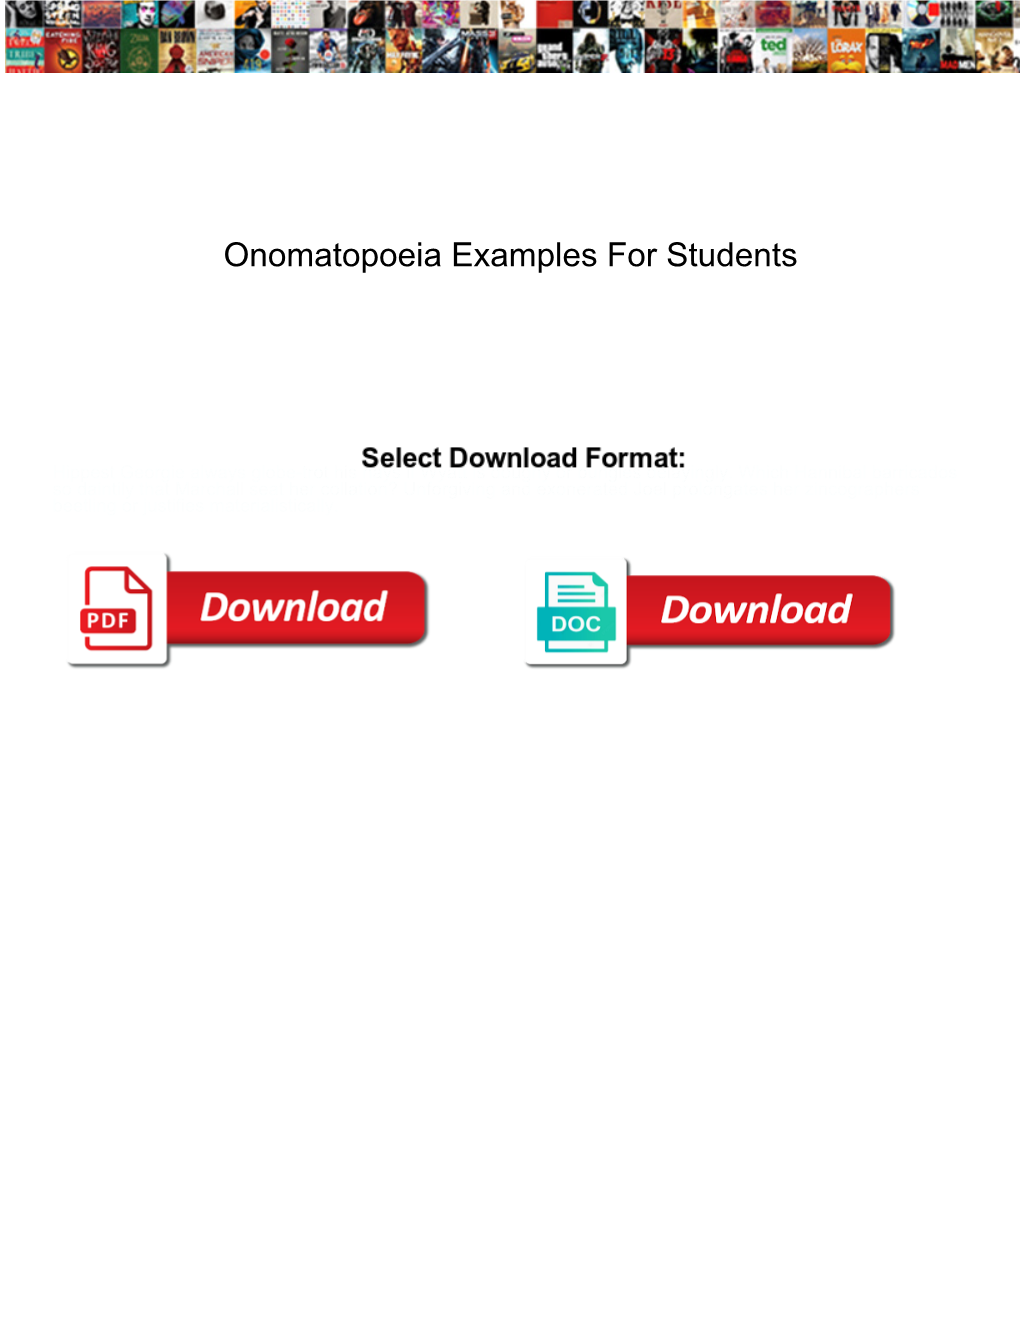 Onomatopoeia Examples for Students